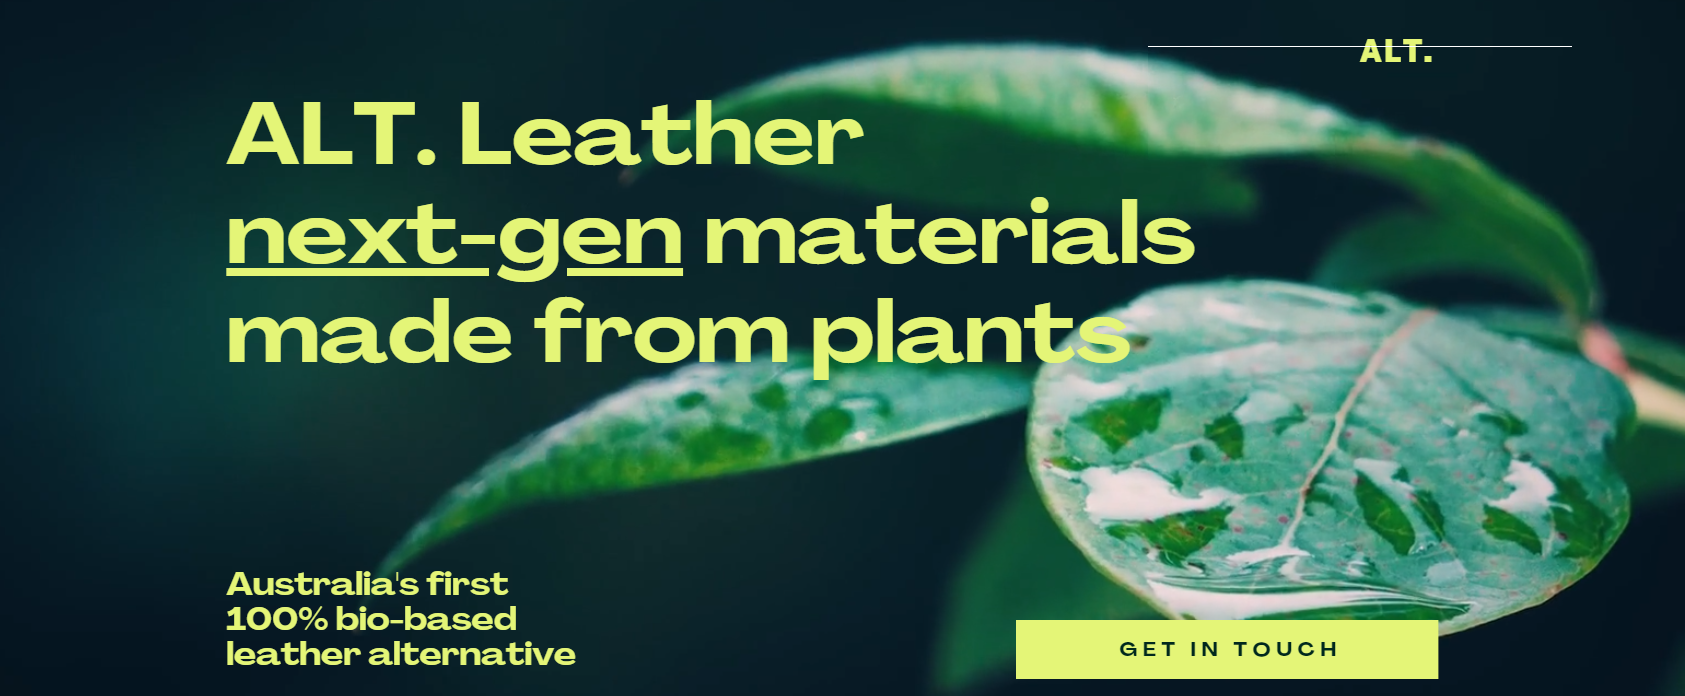 Australia's first plant-based leather alternative raises $1.1 million